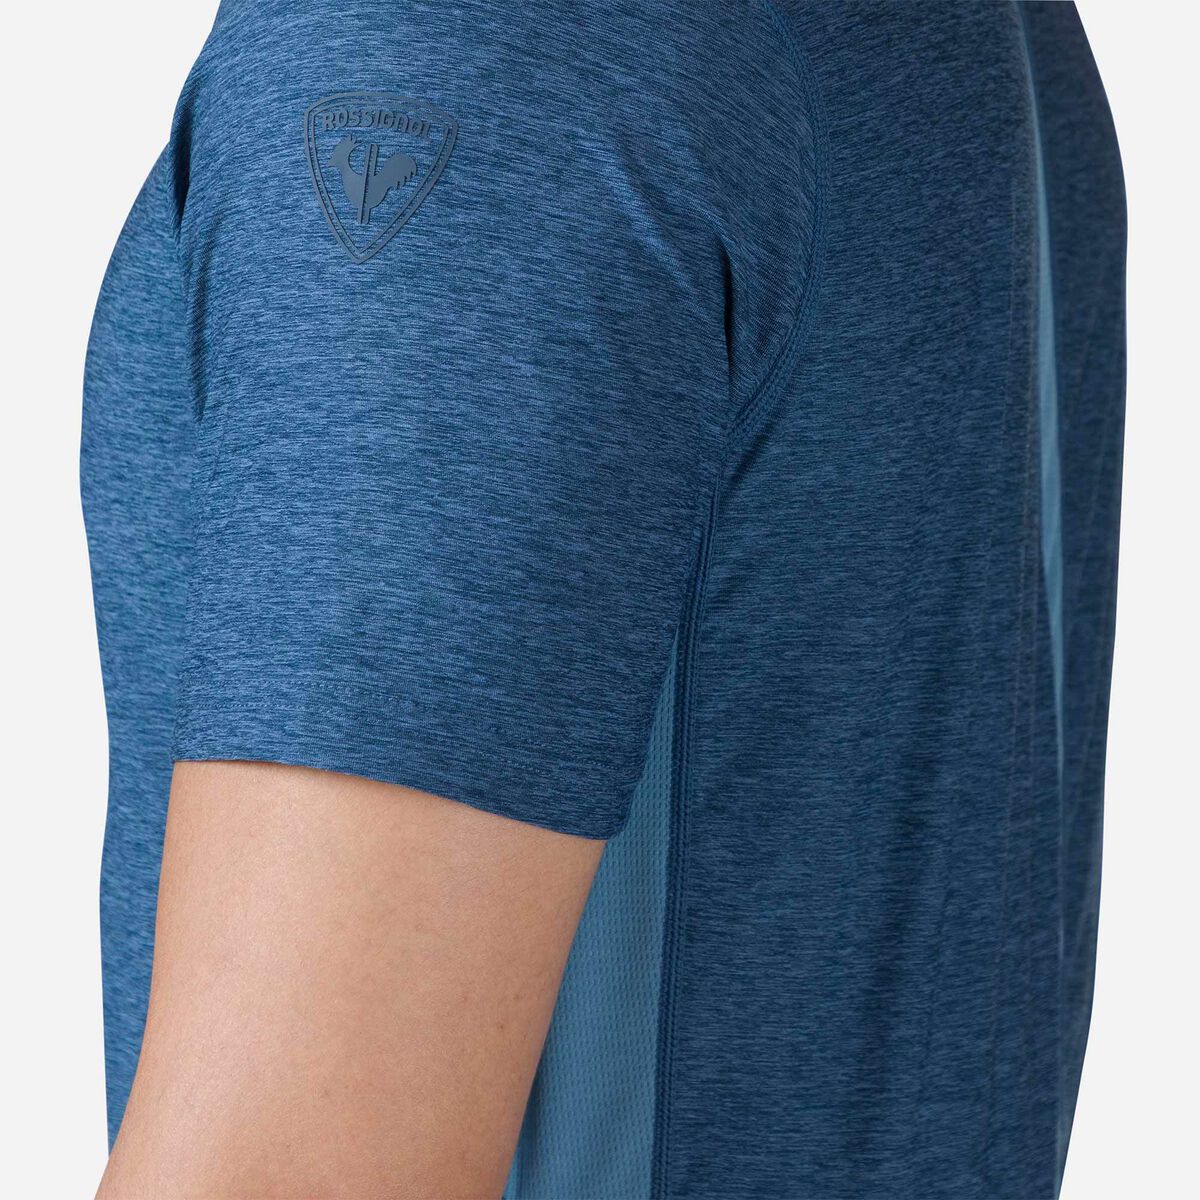 Rossignol T-shirt de randonnée Melange Homme blue